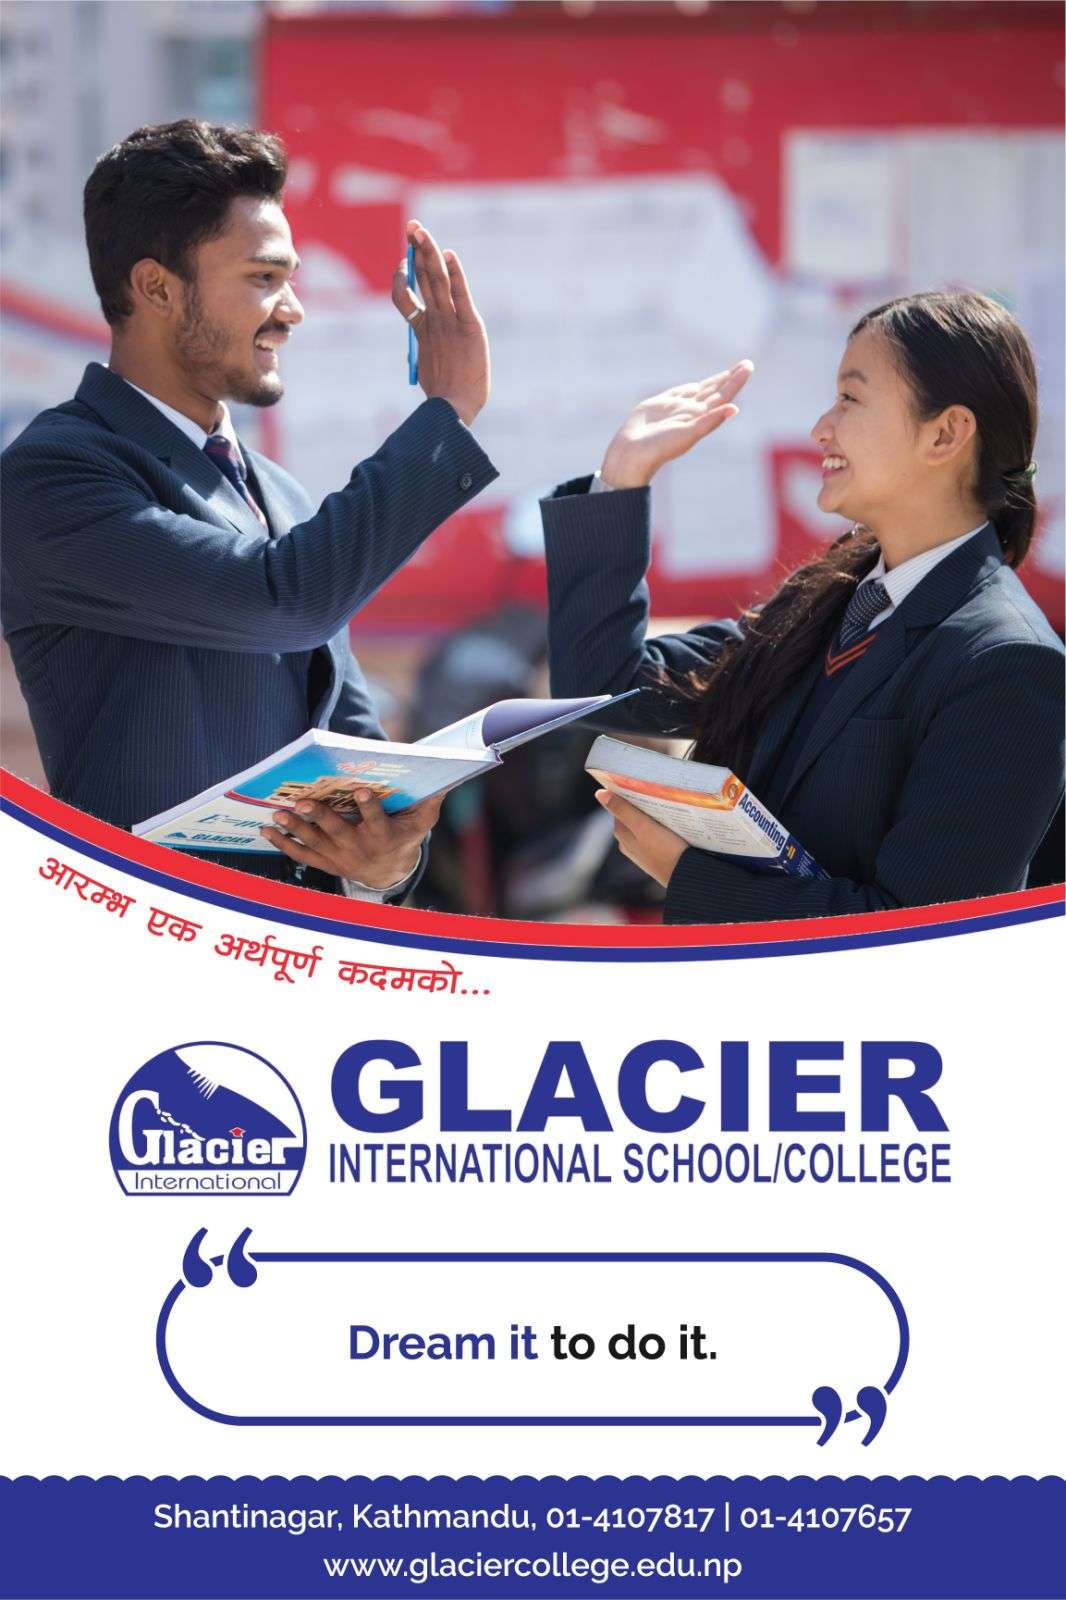 Glacier International School/College